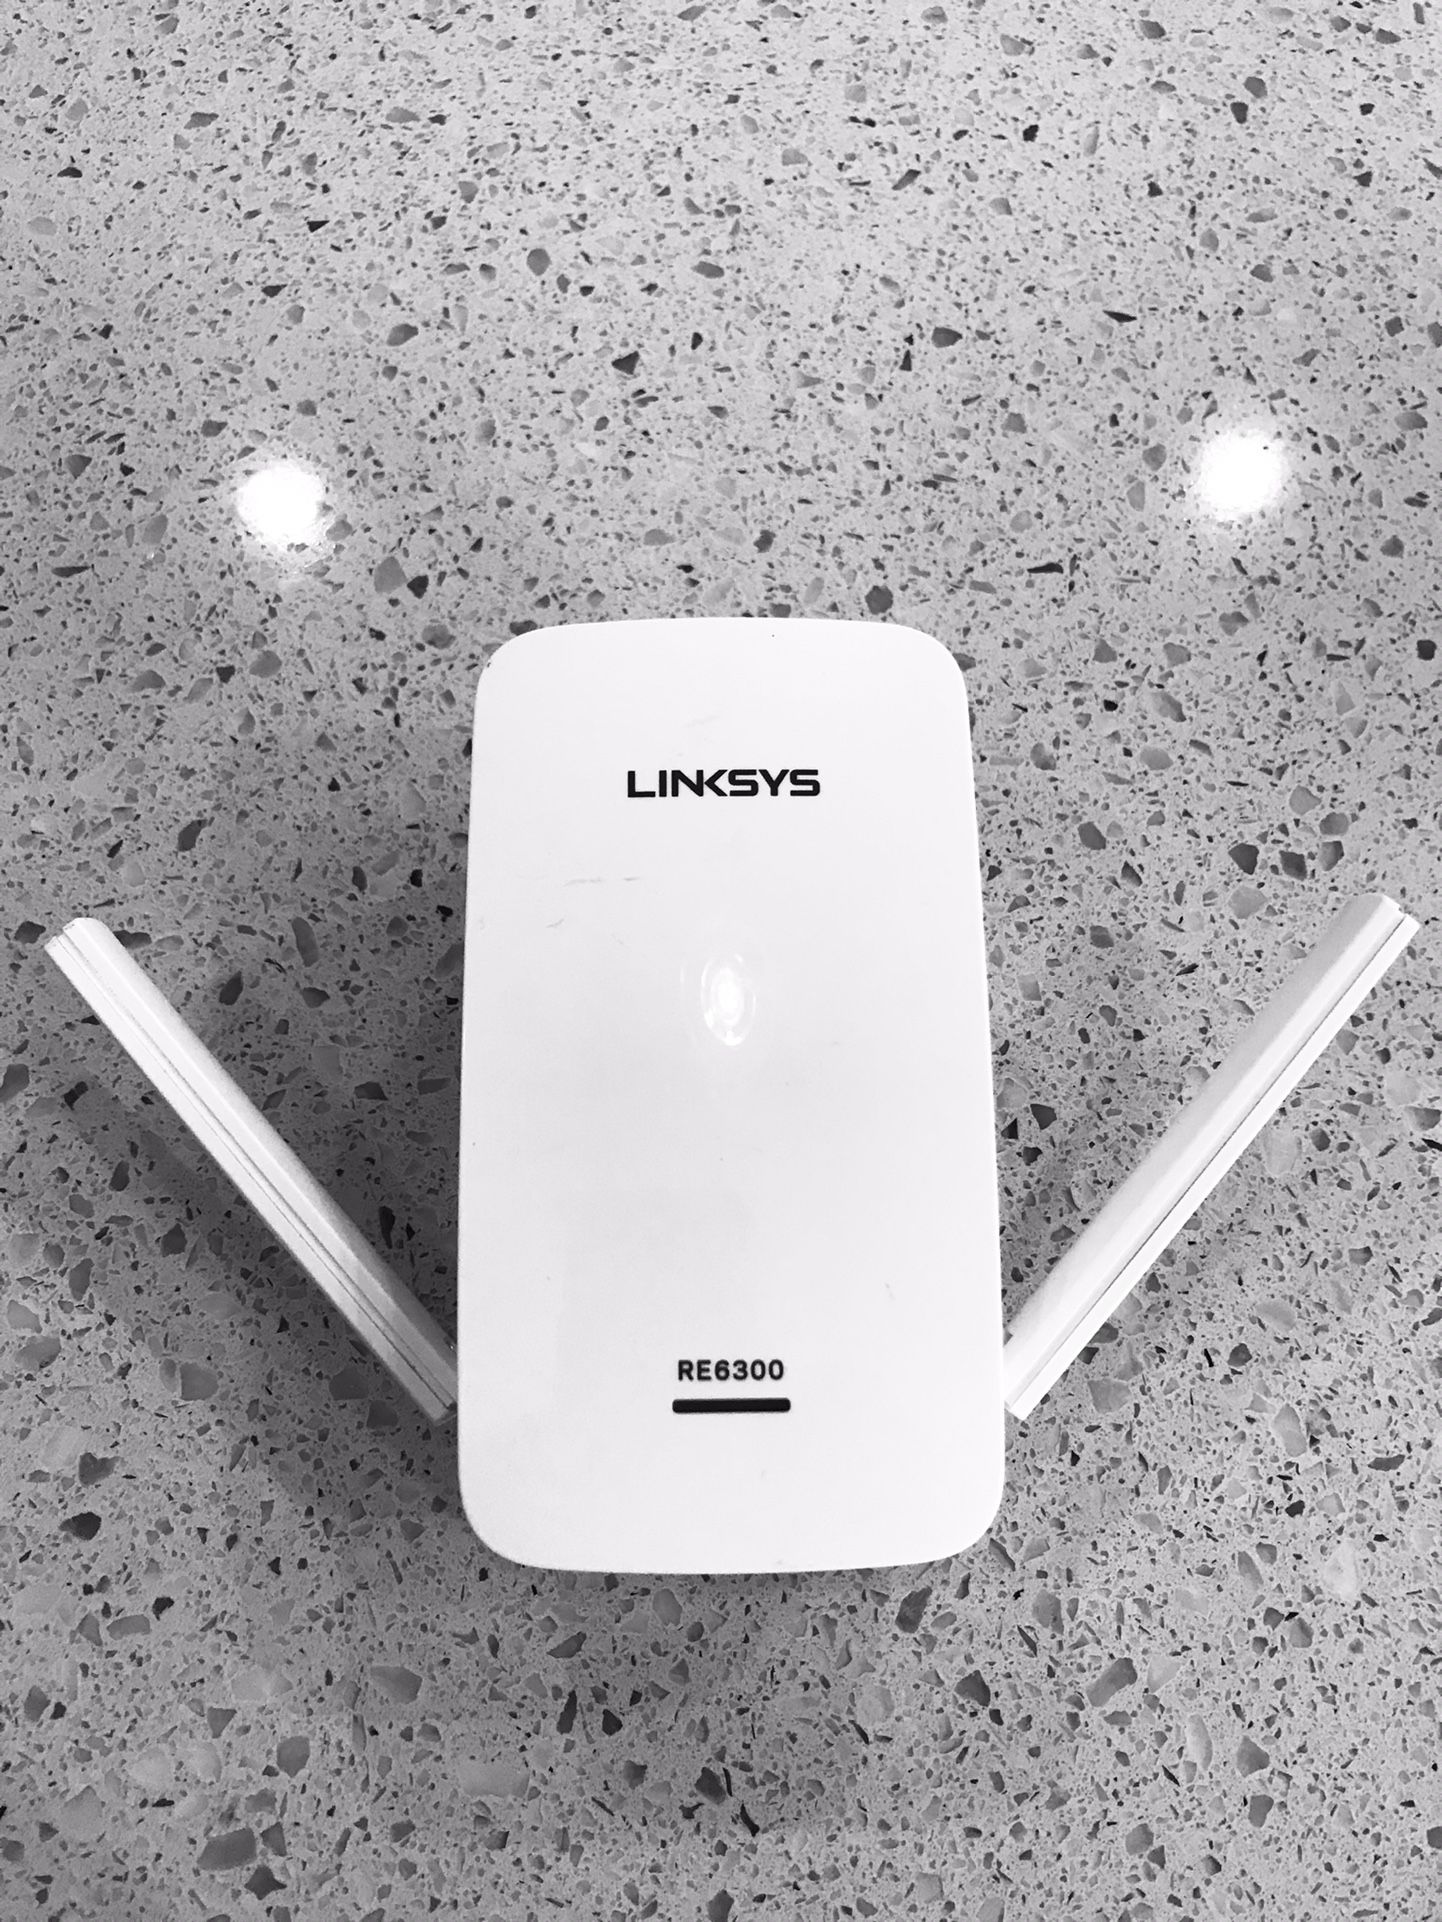 Linksys RE6300 WiFi Range Extender